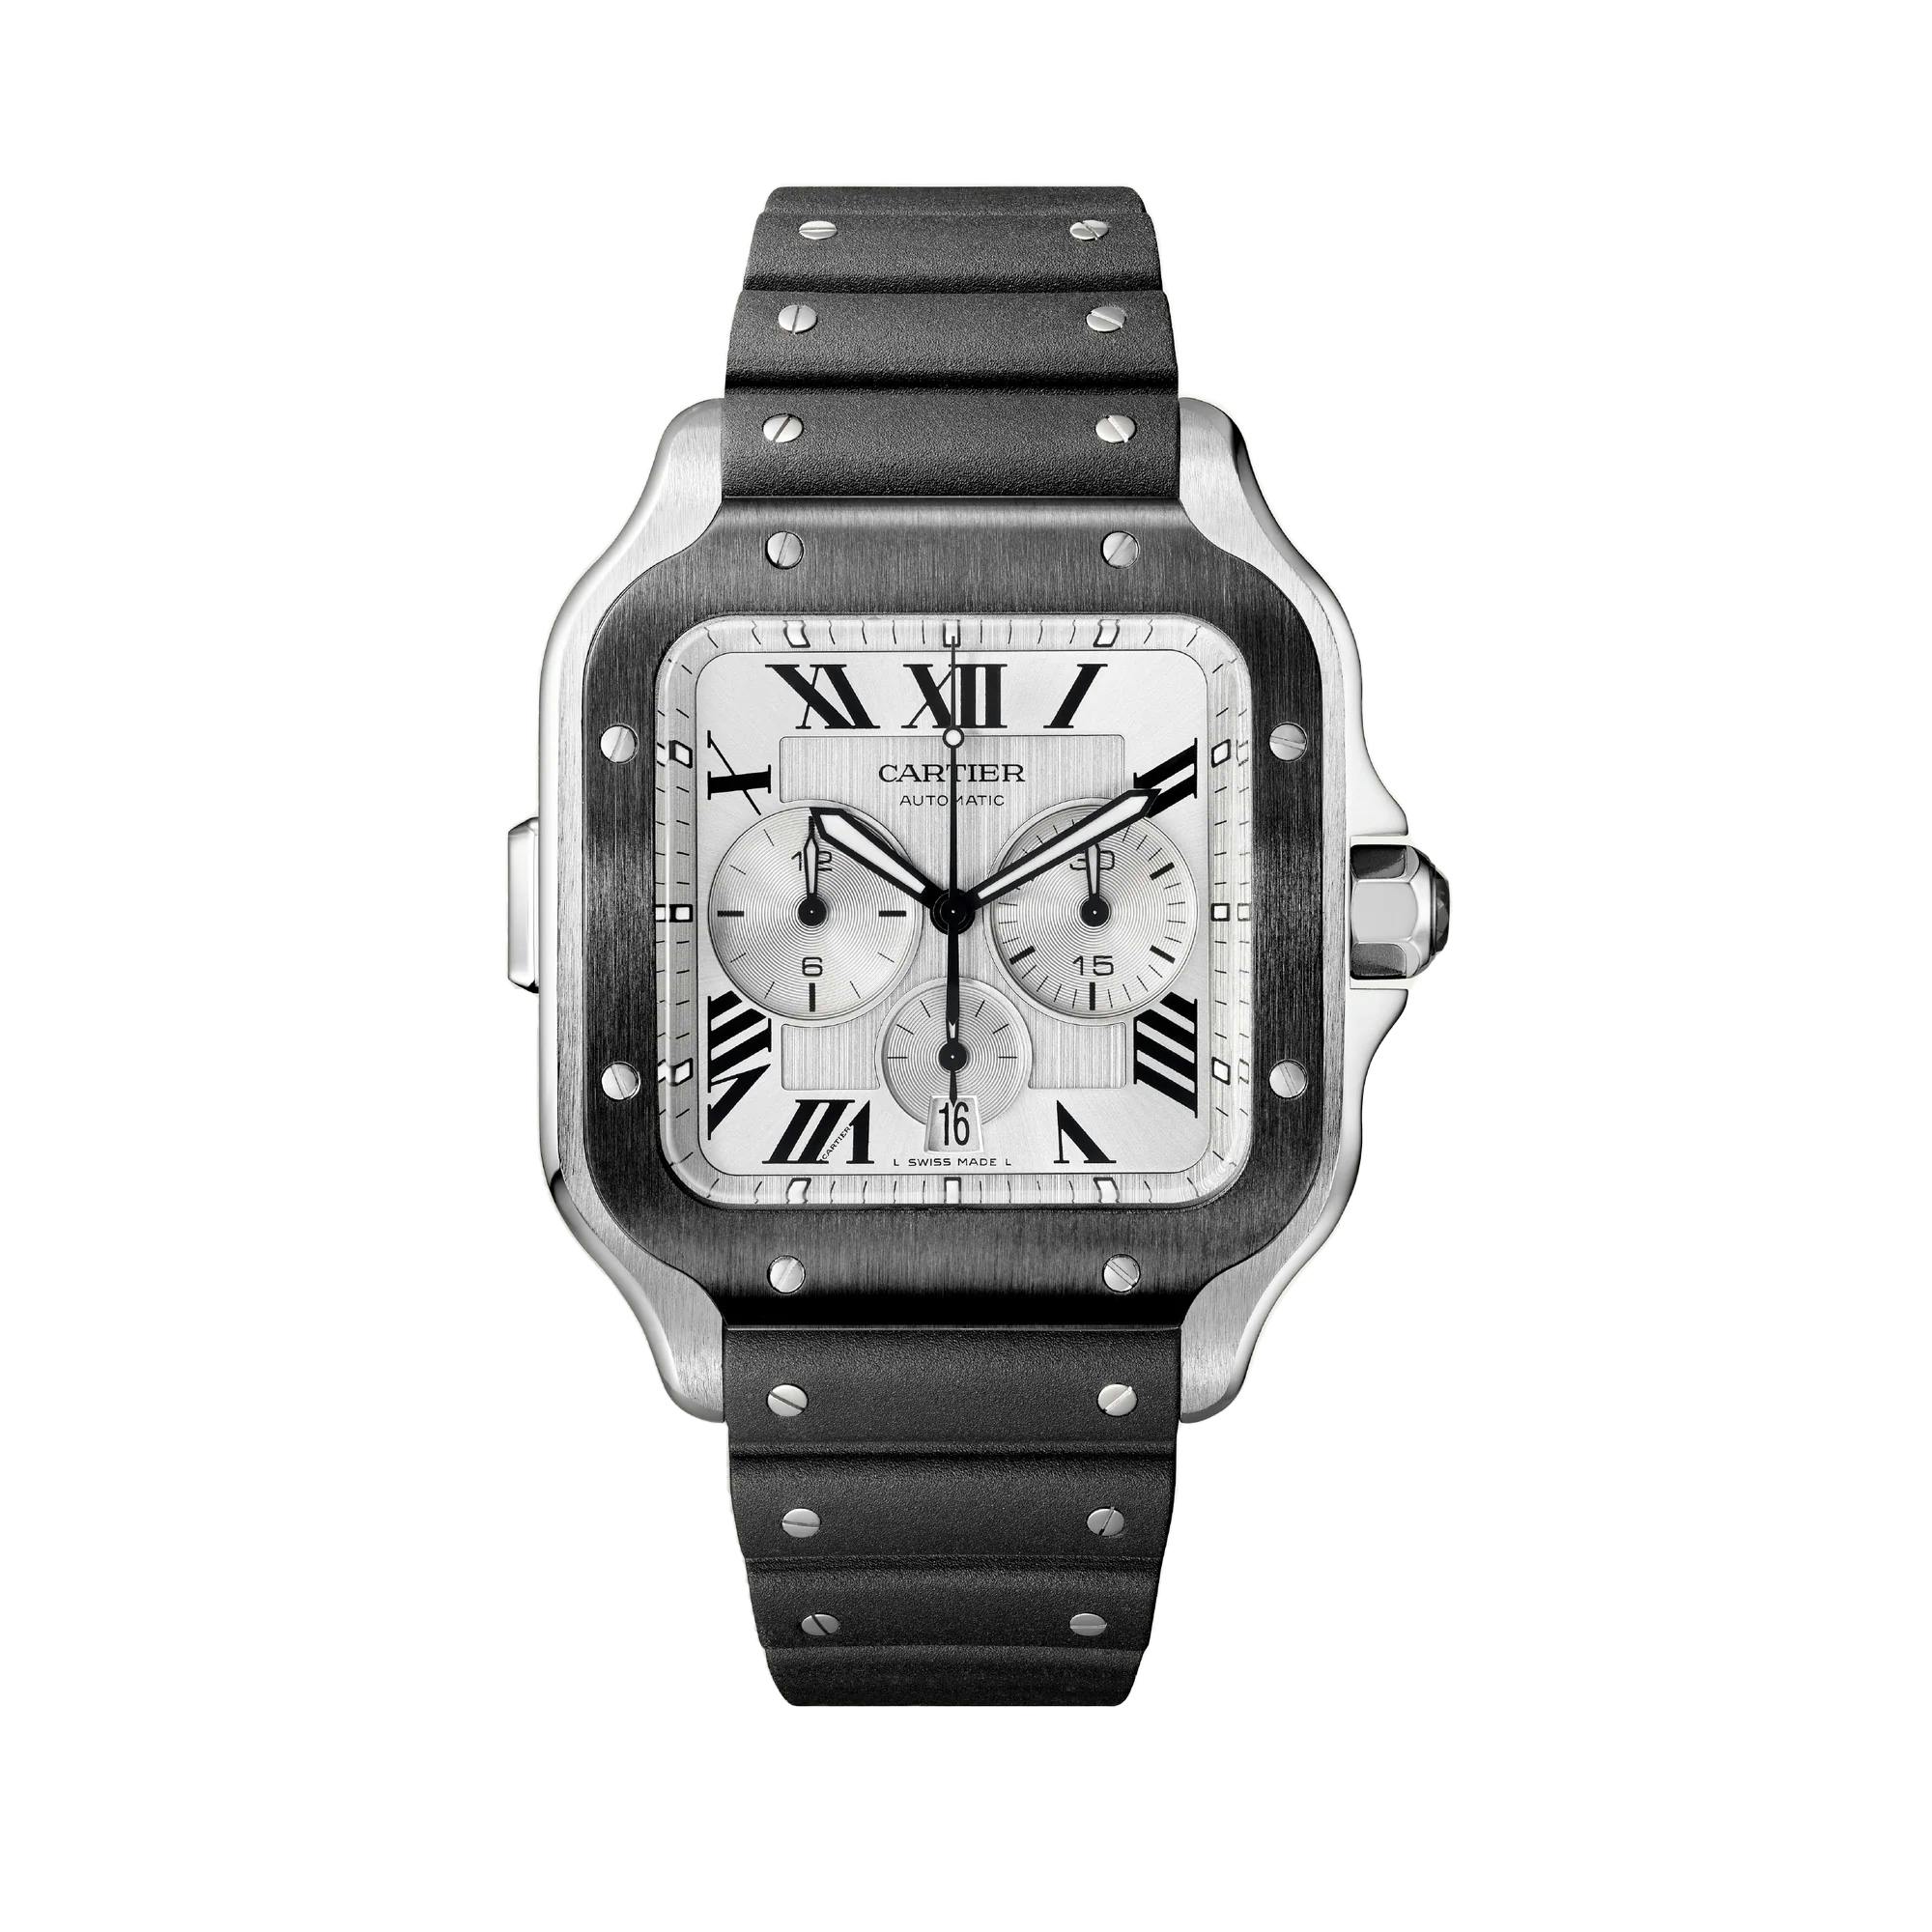 Santos de Cartier Chronograph Watch in Black, extra large model